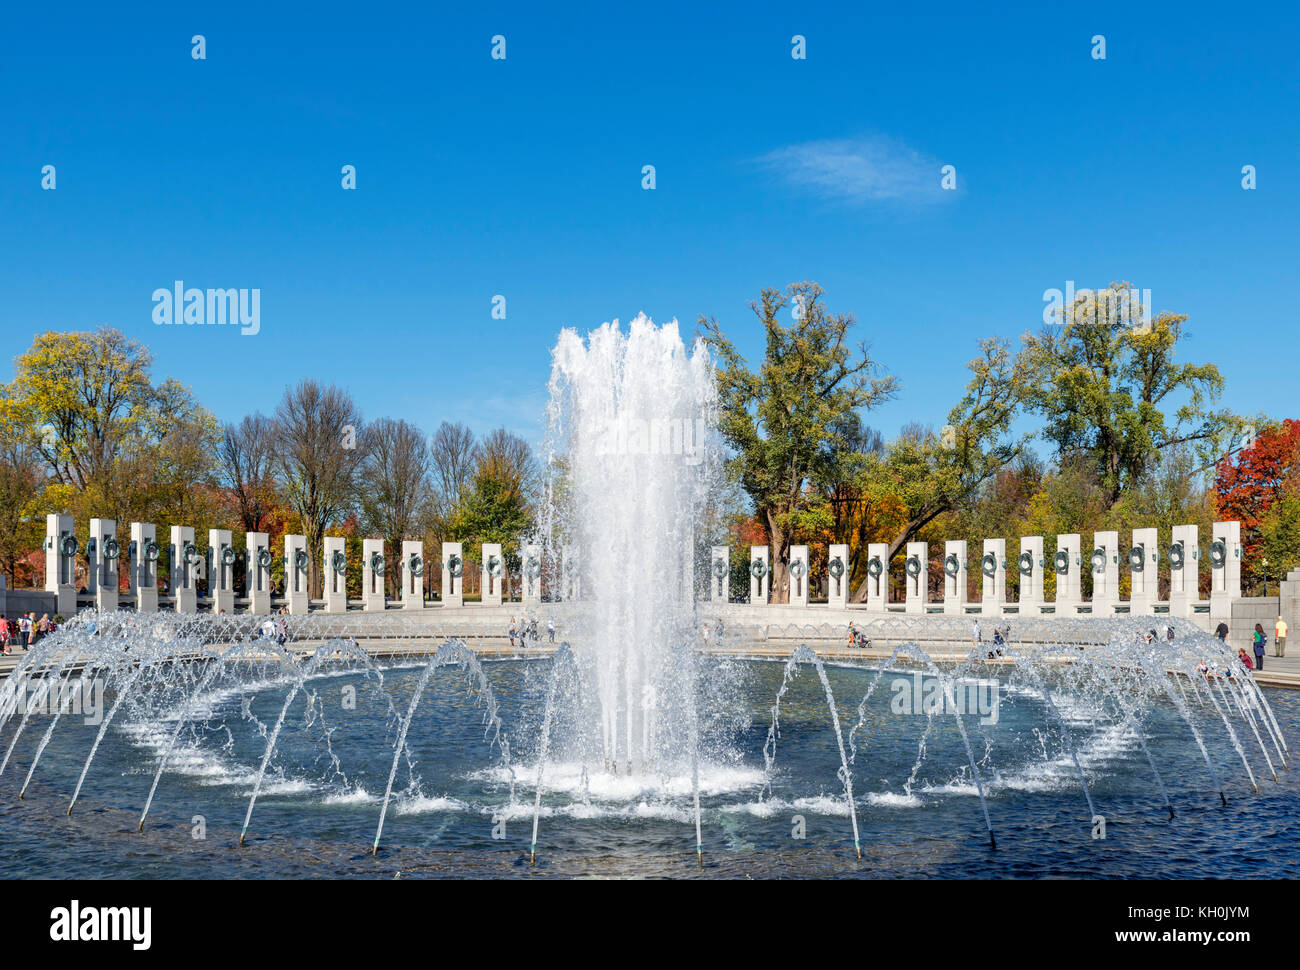 Fountain at the National World War II Memorial, Washington DC, USA Stock Photo